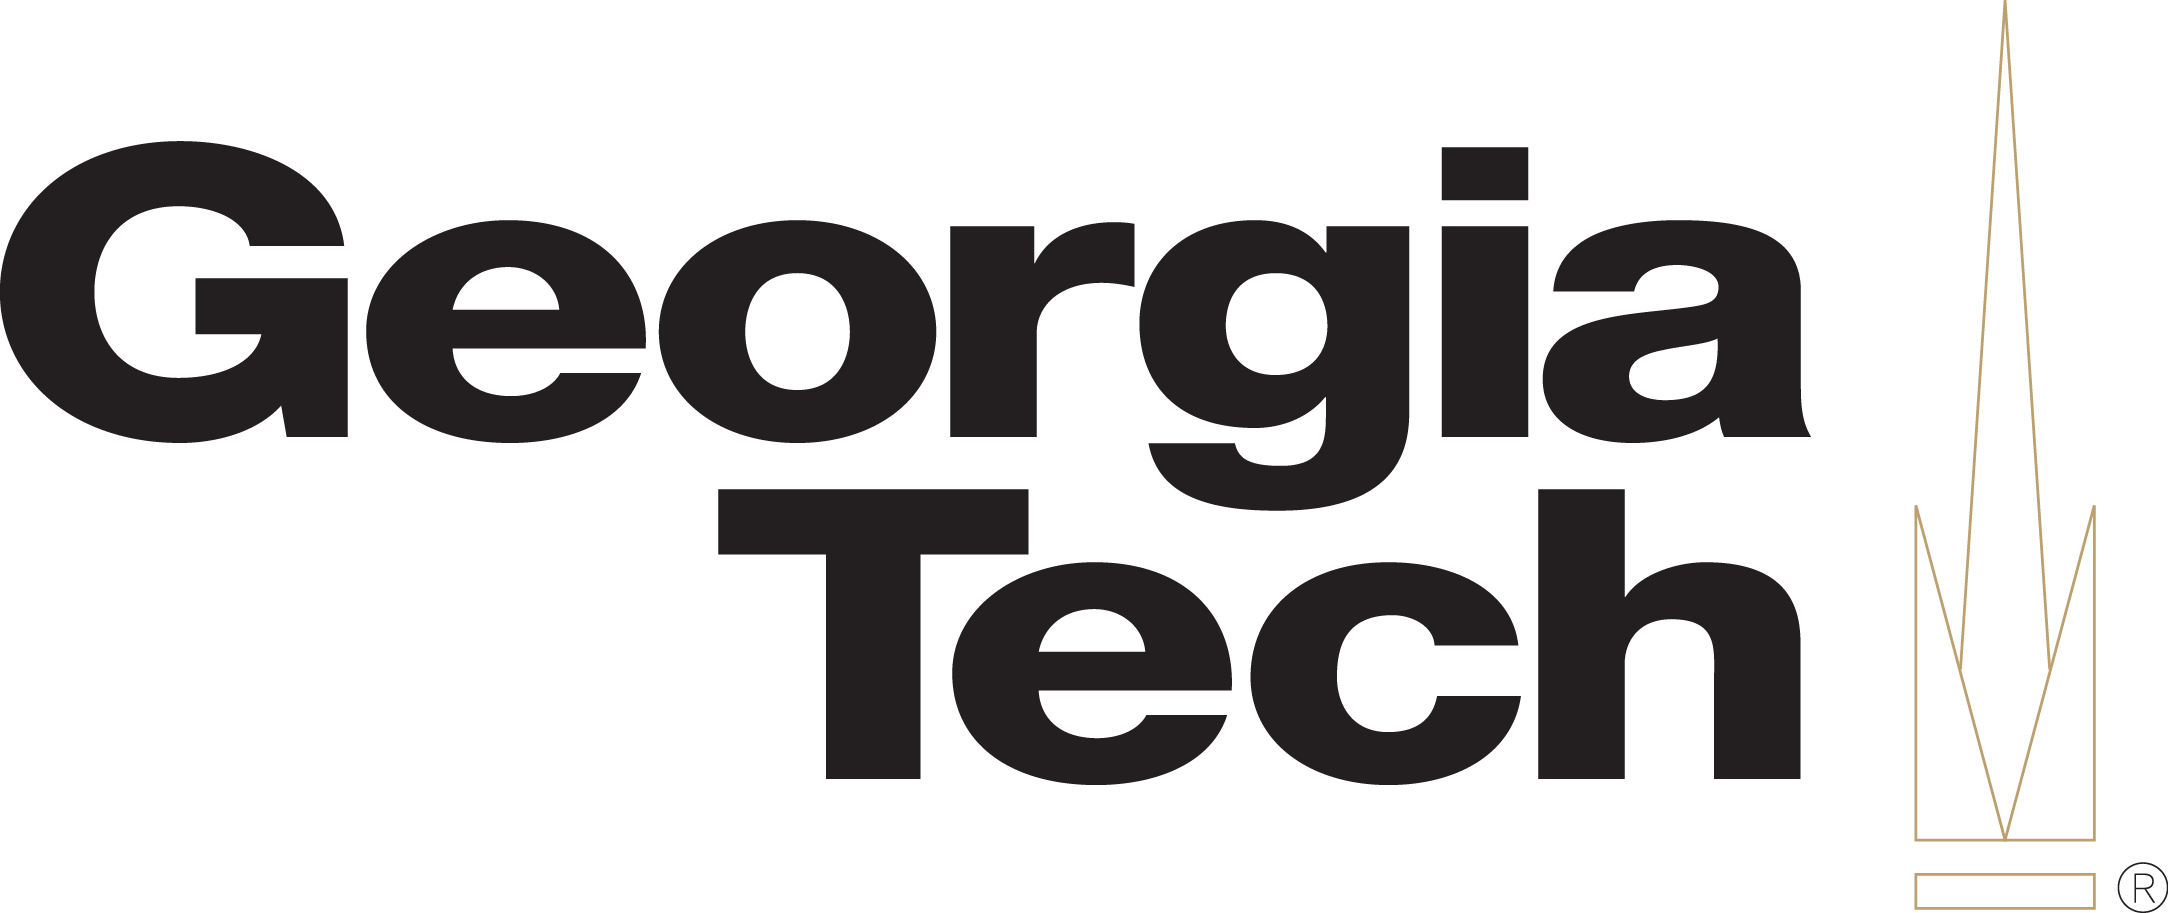 Georgia Tech Logo - Georgia Institute of Technology - GT